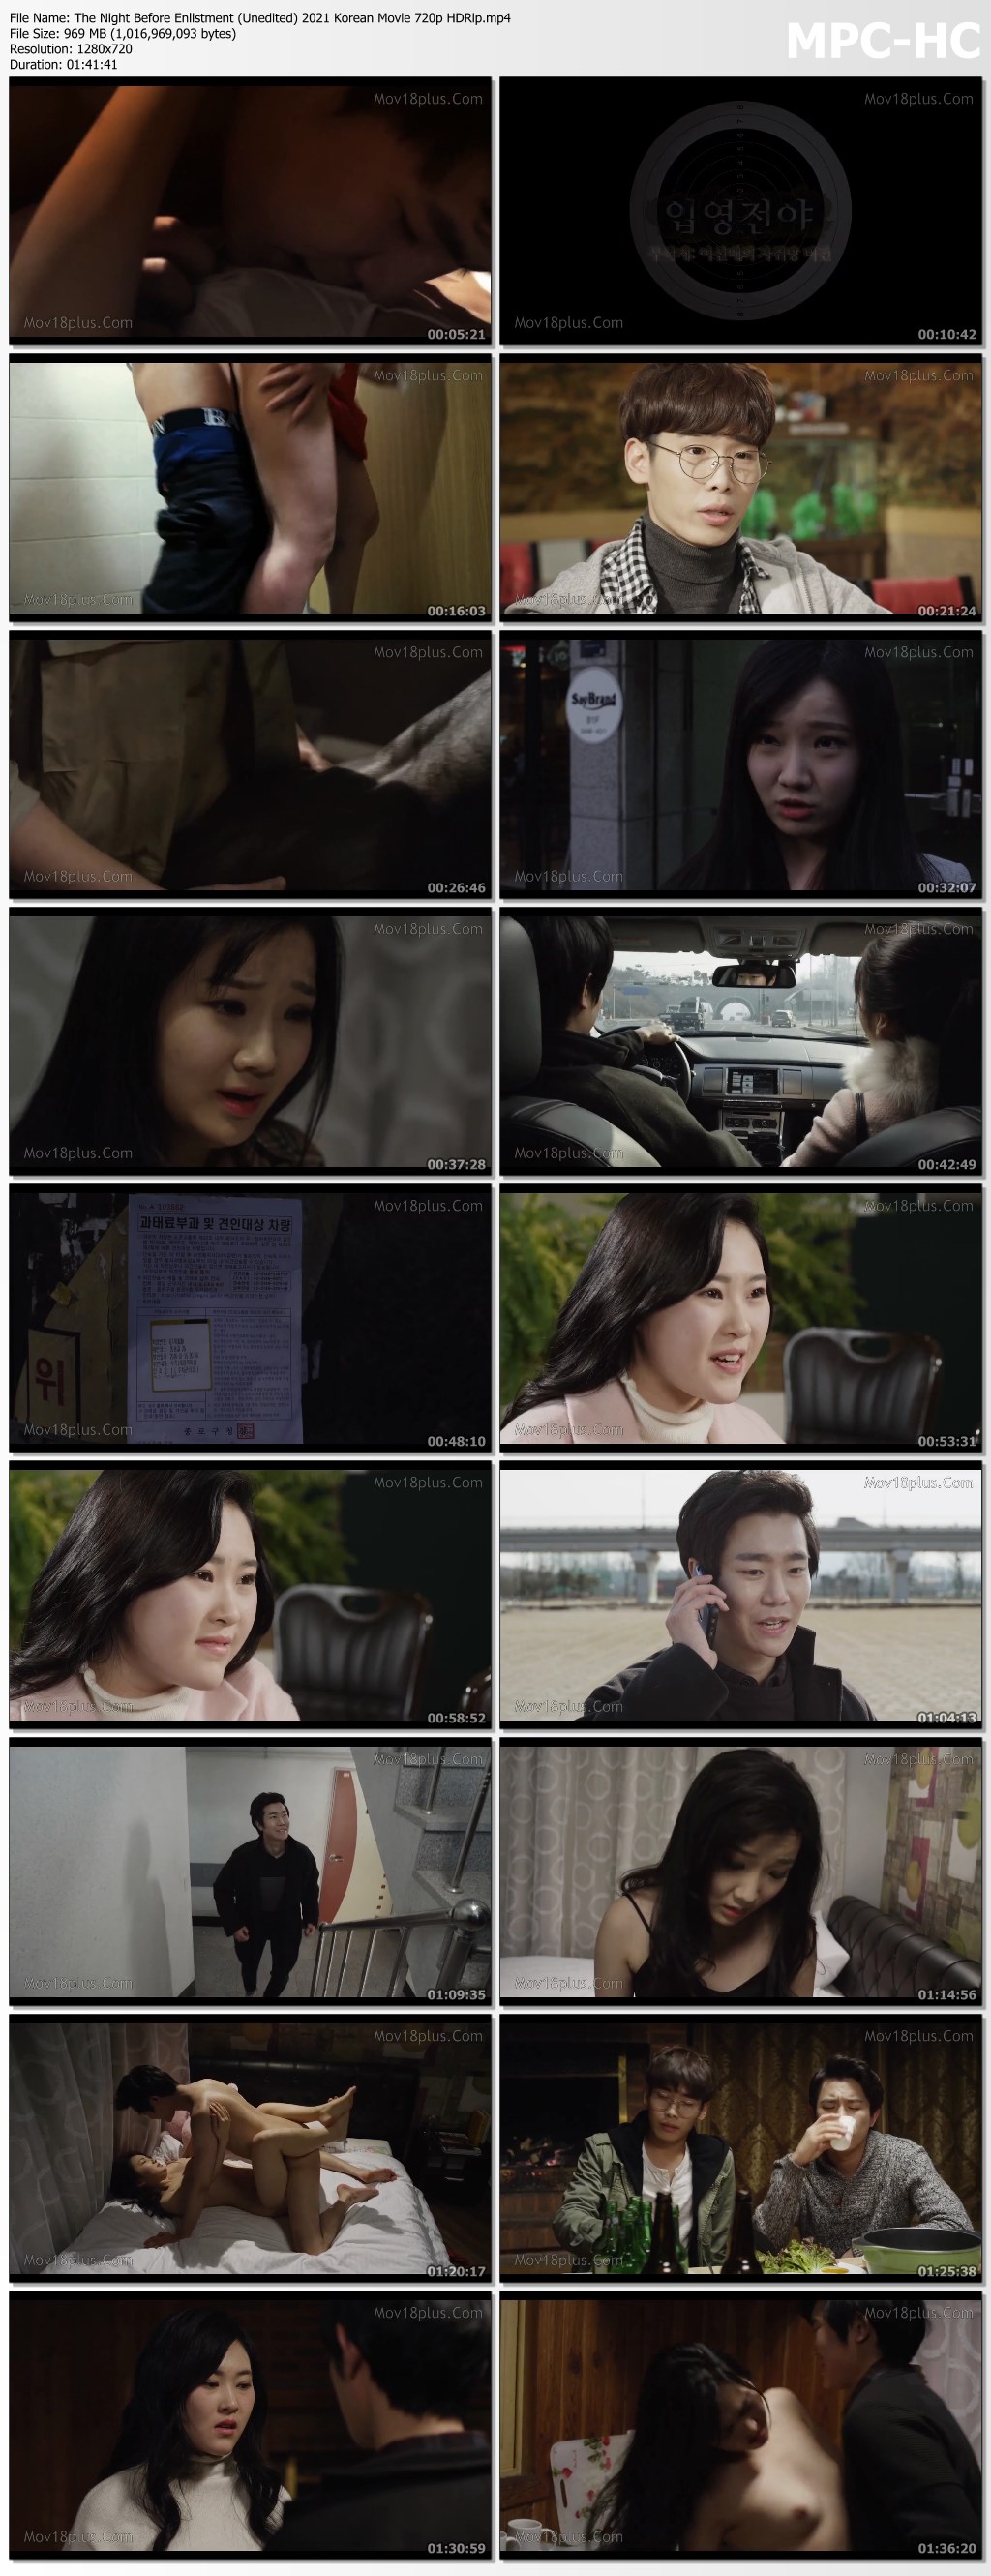 The-Night-Before-Enlistment-Unedited-2021-Korean-Movie-720p-HDRip.mp4_thumbs.jpg